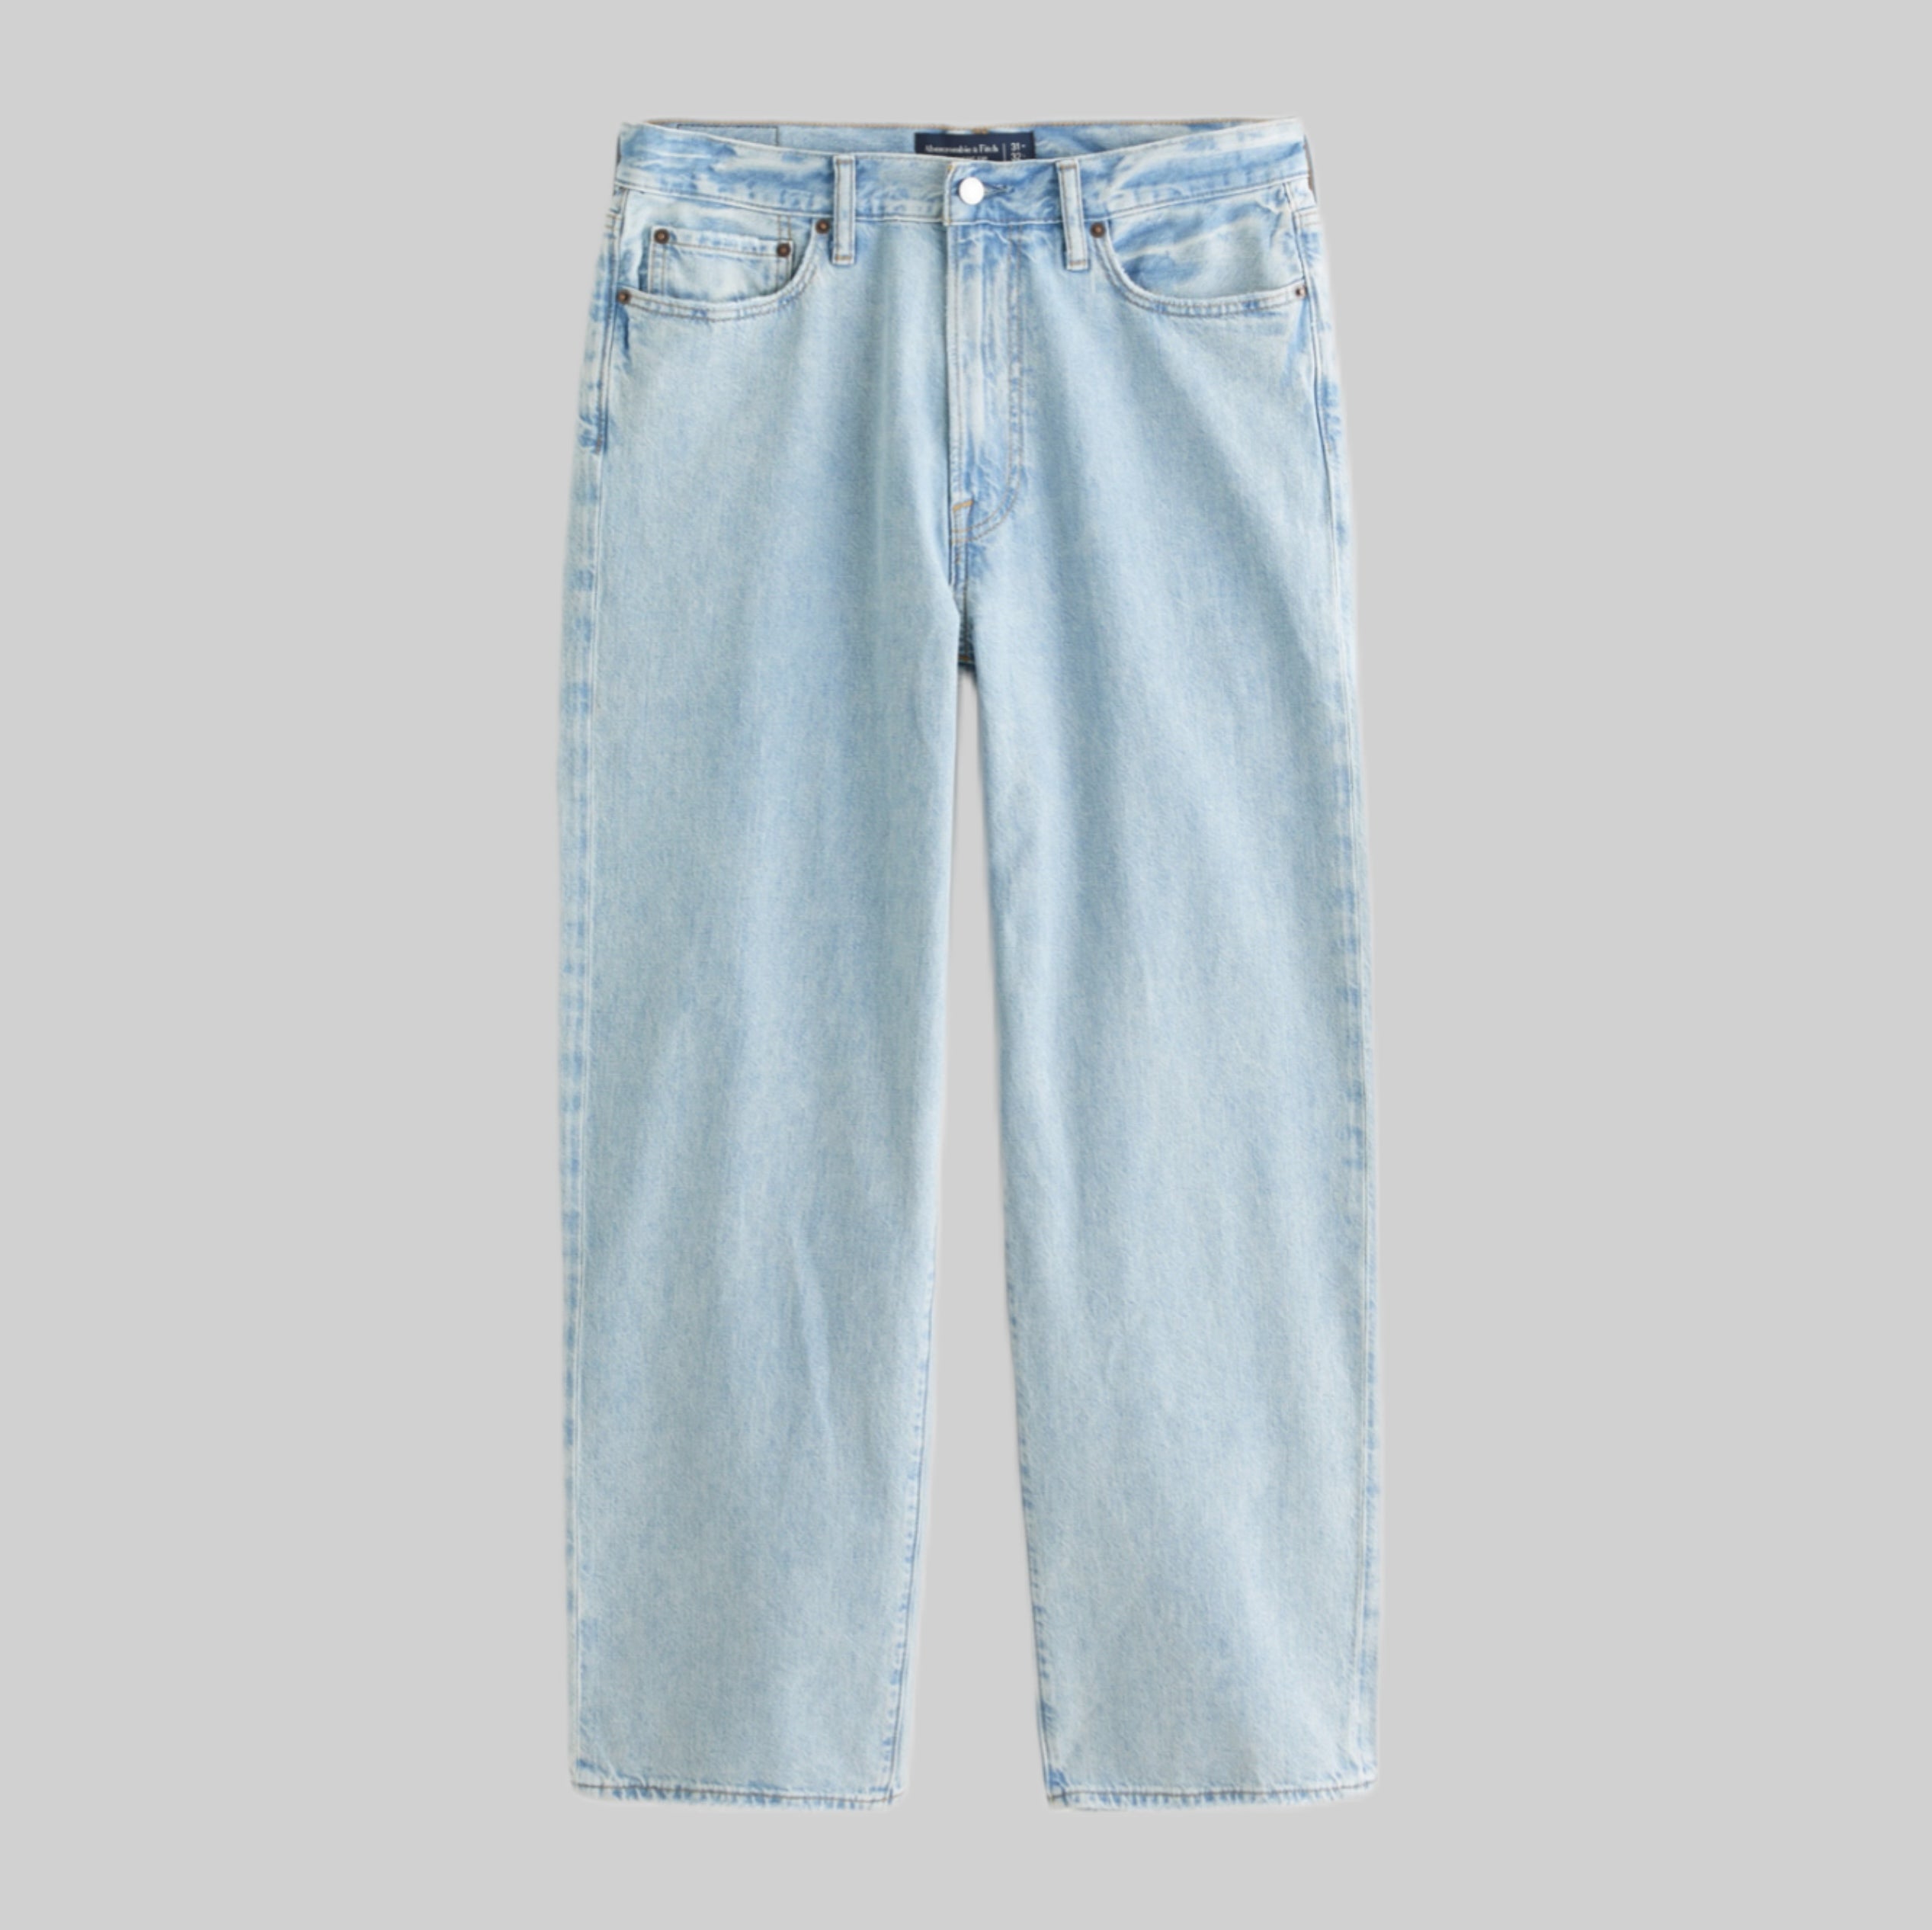 Abercrombie & Fitch jeans, men, frontside, blue